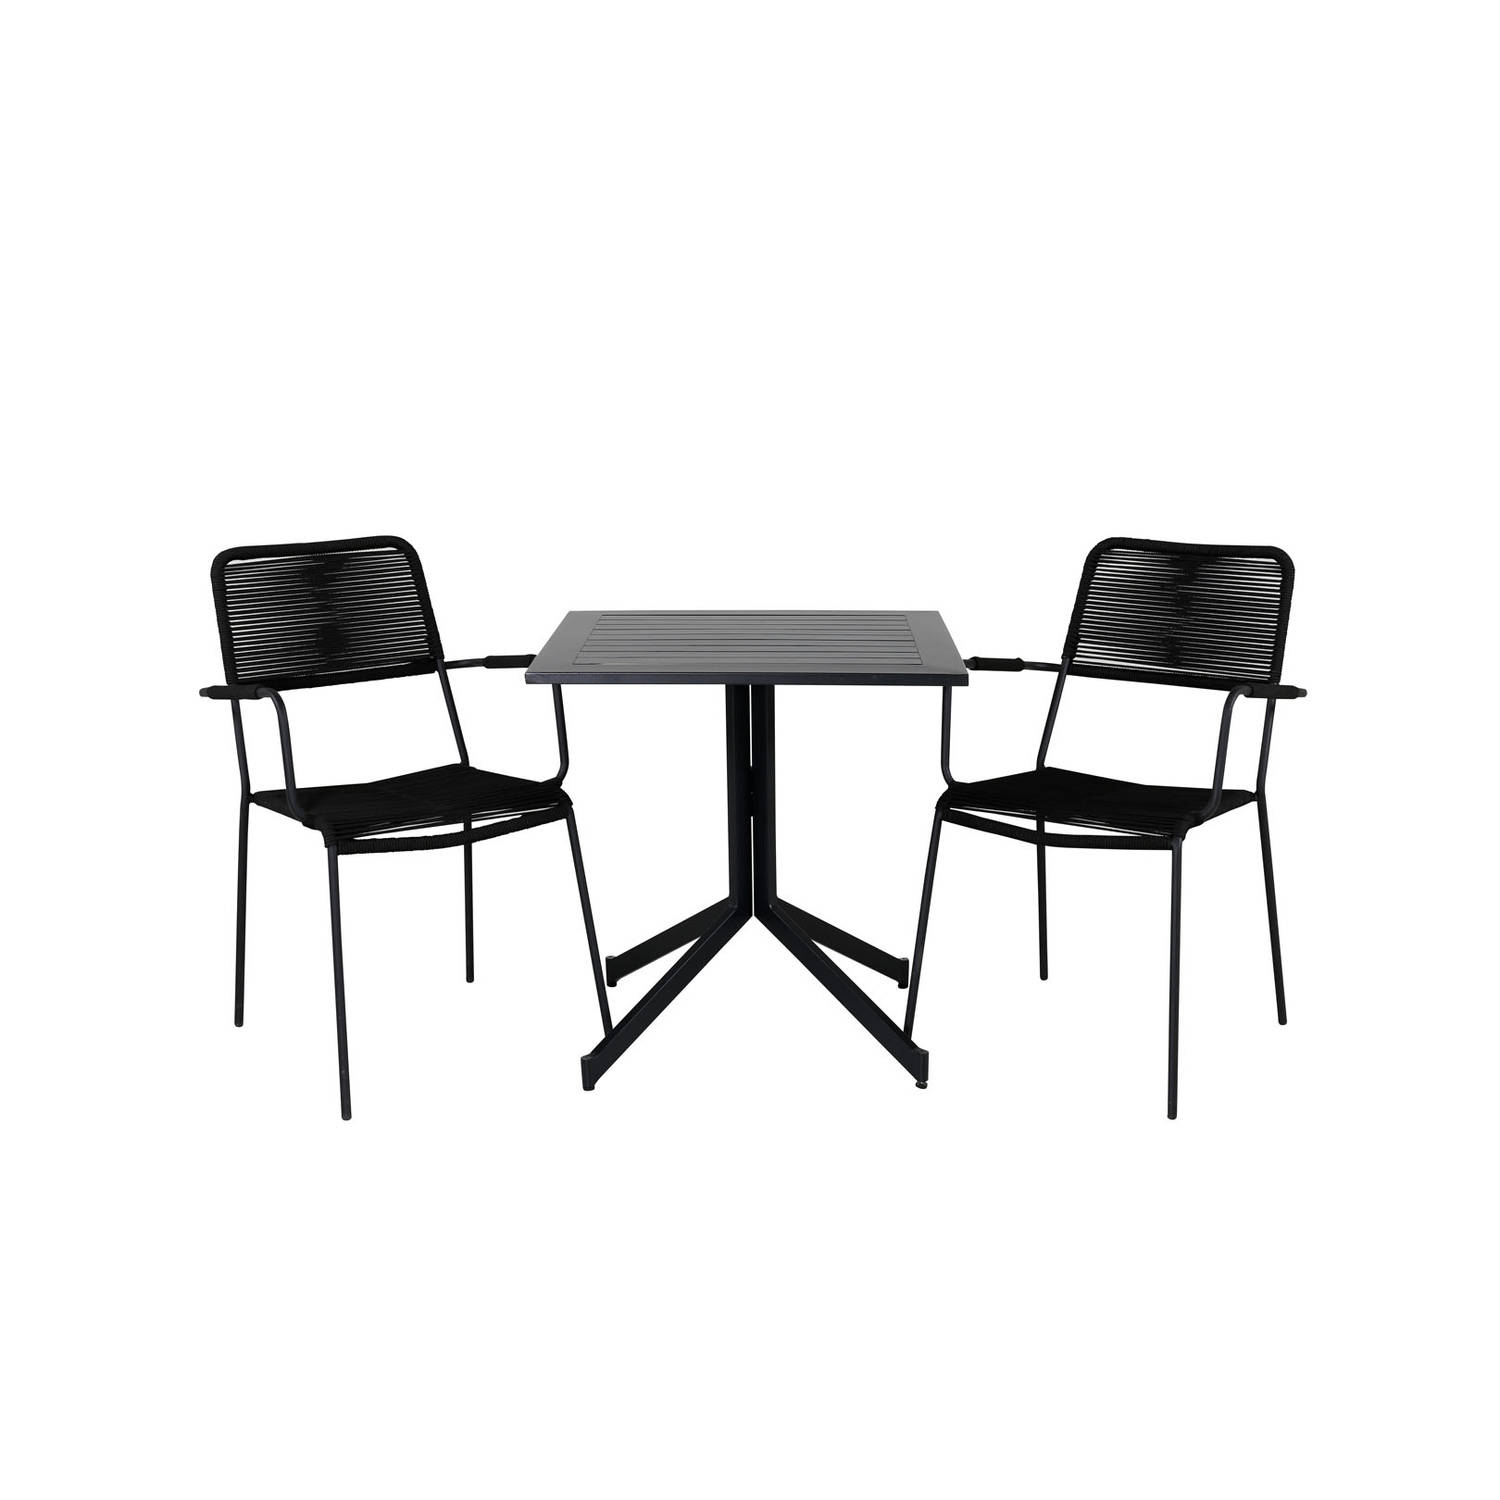 Blokker Tuinsets - Way tuinmeubelset tafel 70x70cm en 2 stoel armleuning Lindos zwart. aanbieding